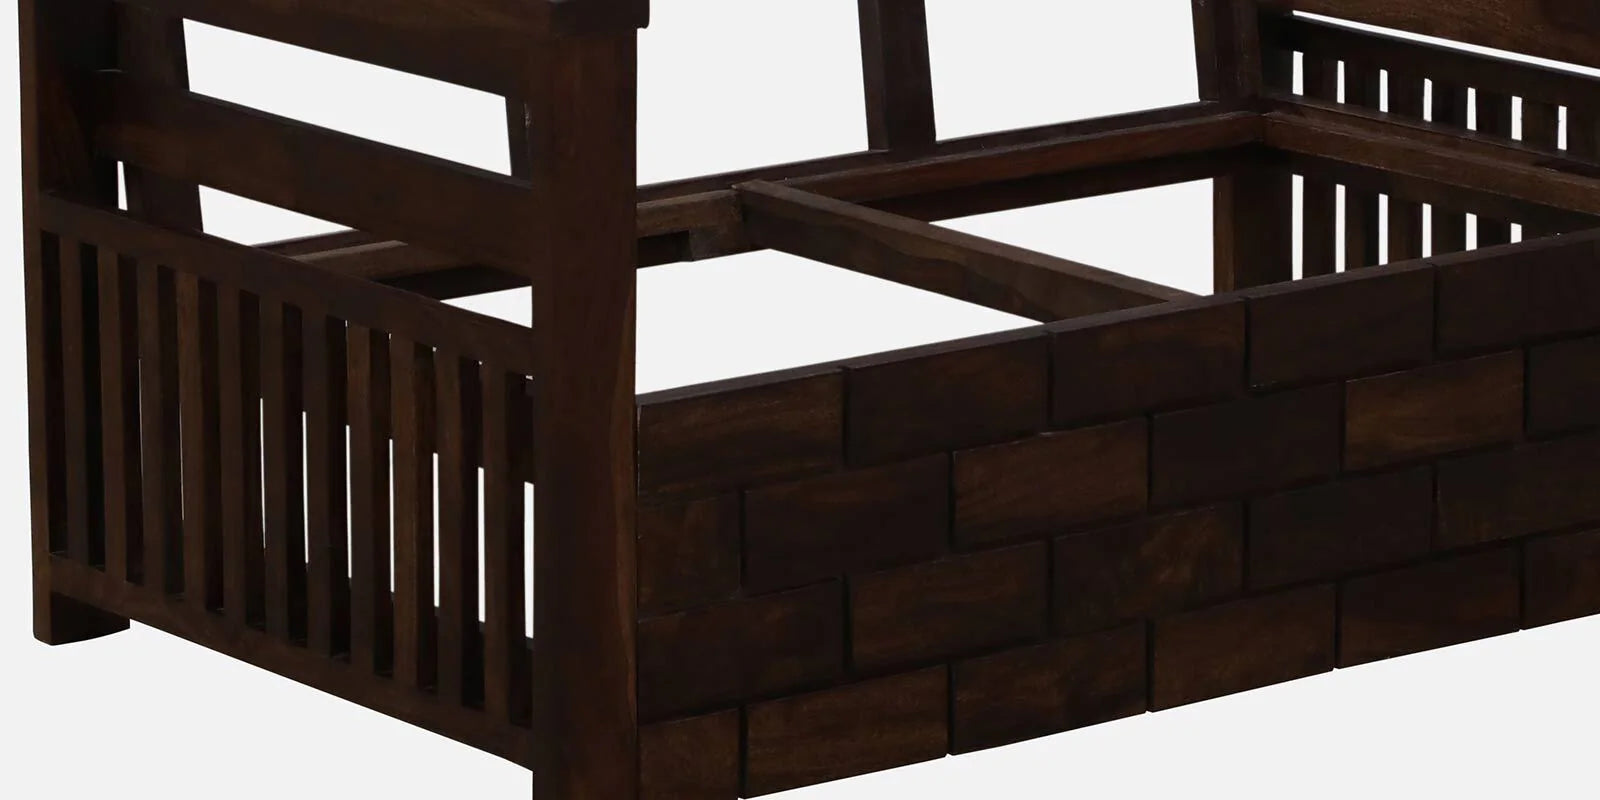 Annei Solid Wood 2 Seater Sofa In Provincial Teak Finish By Rajwada - Rajwada Furnish